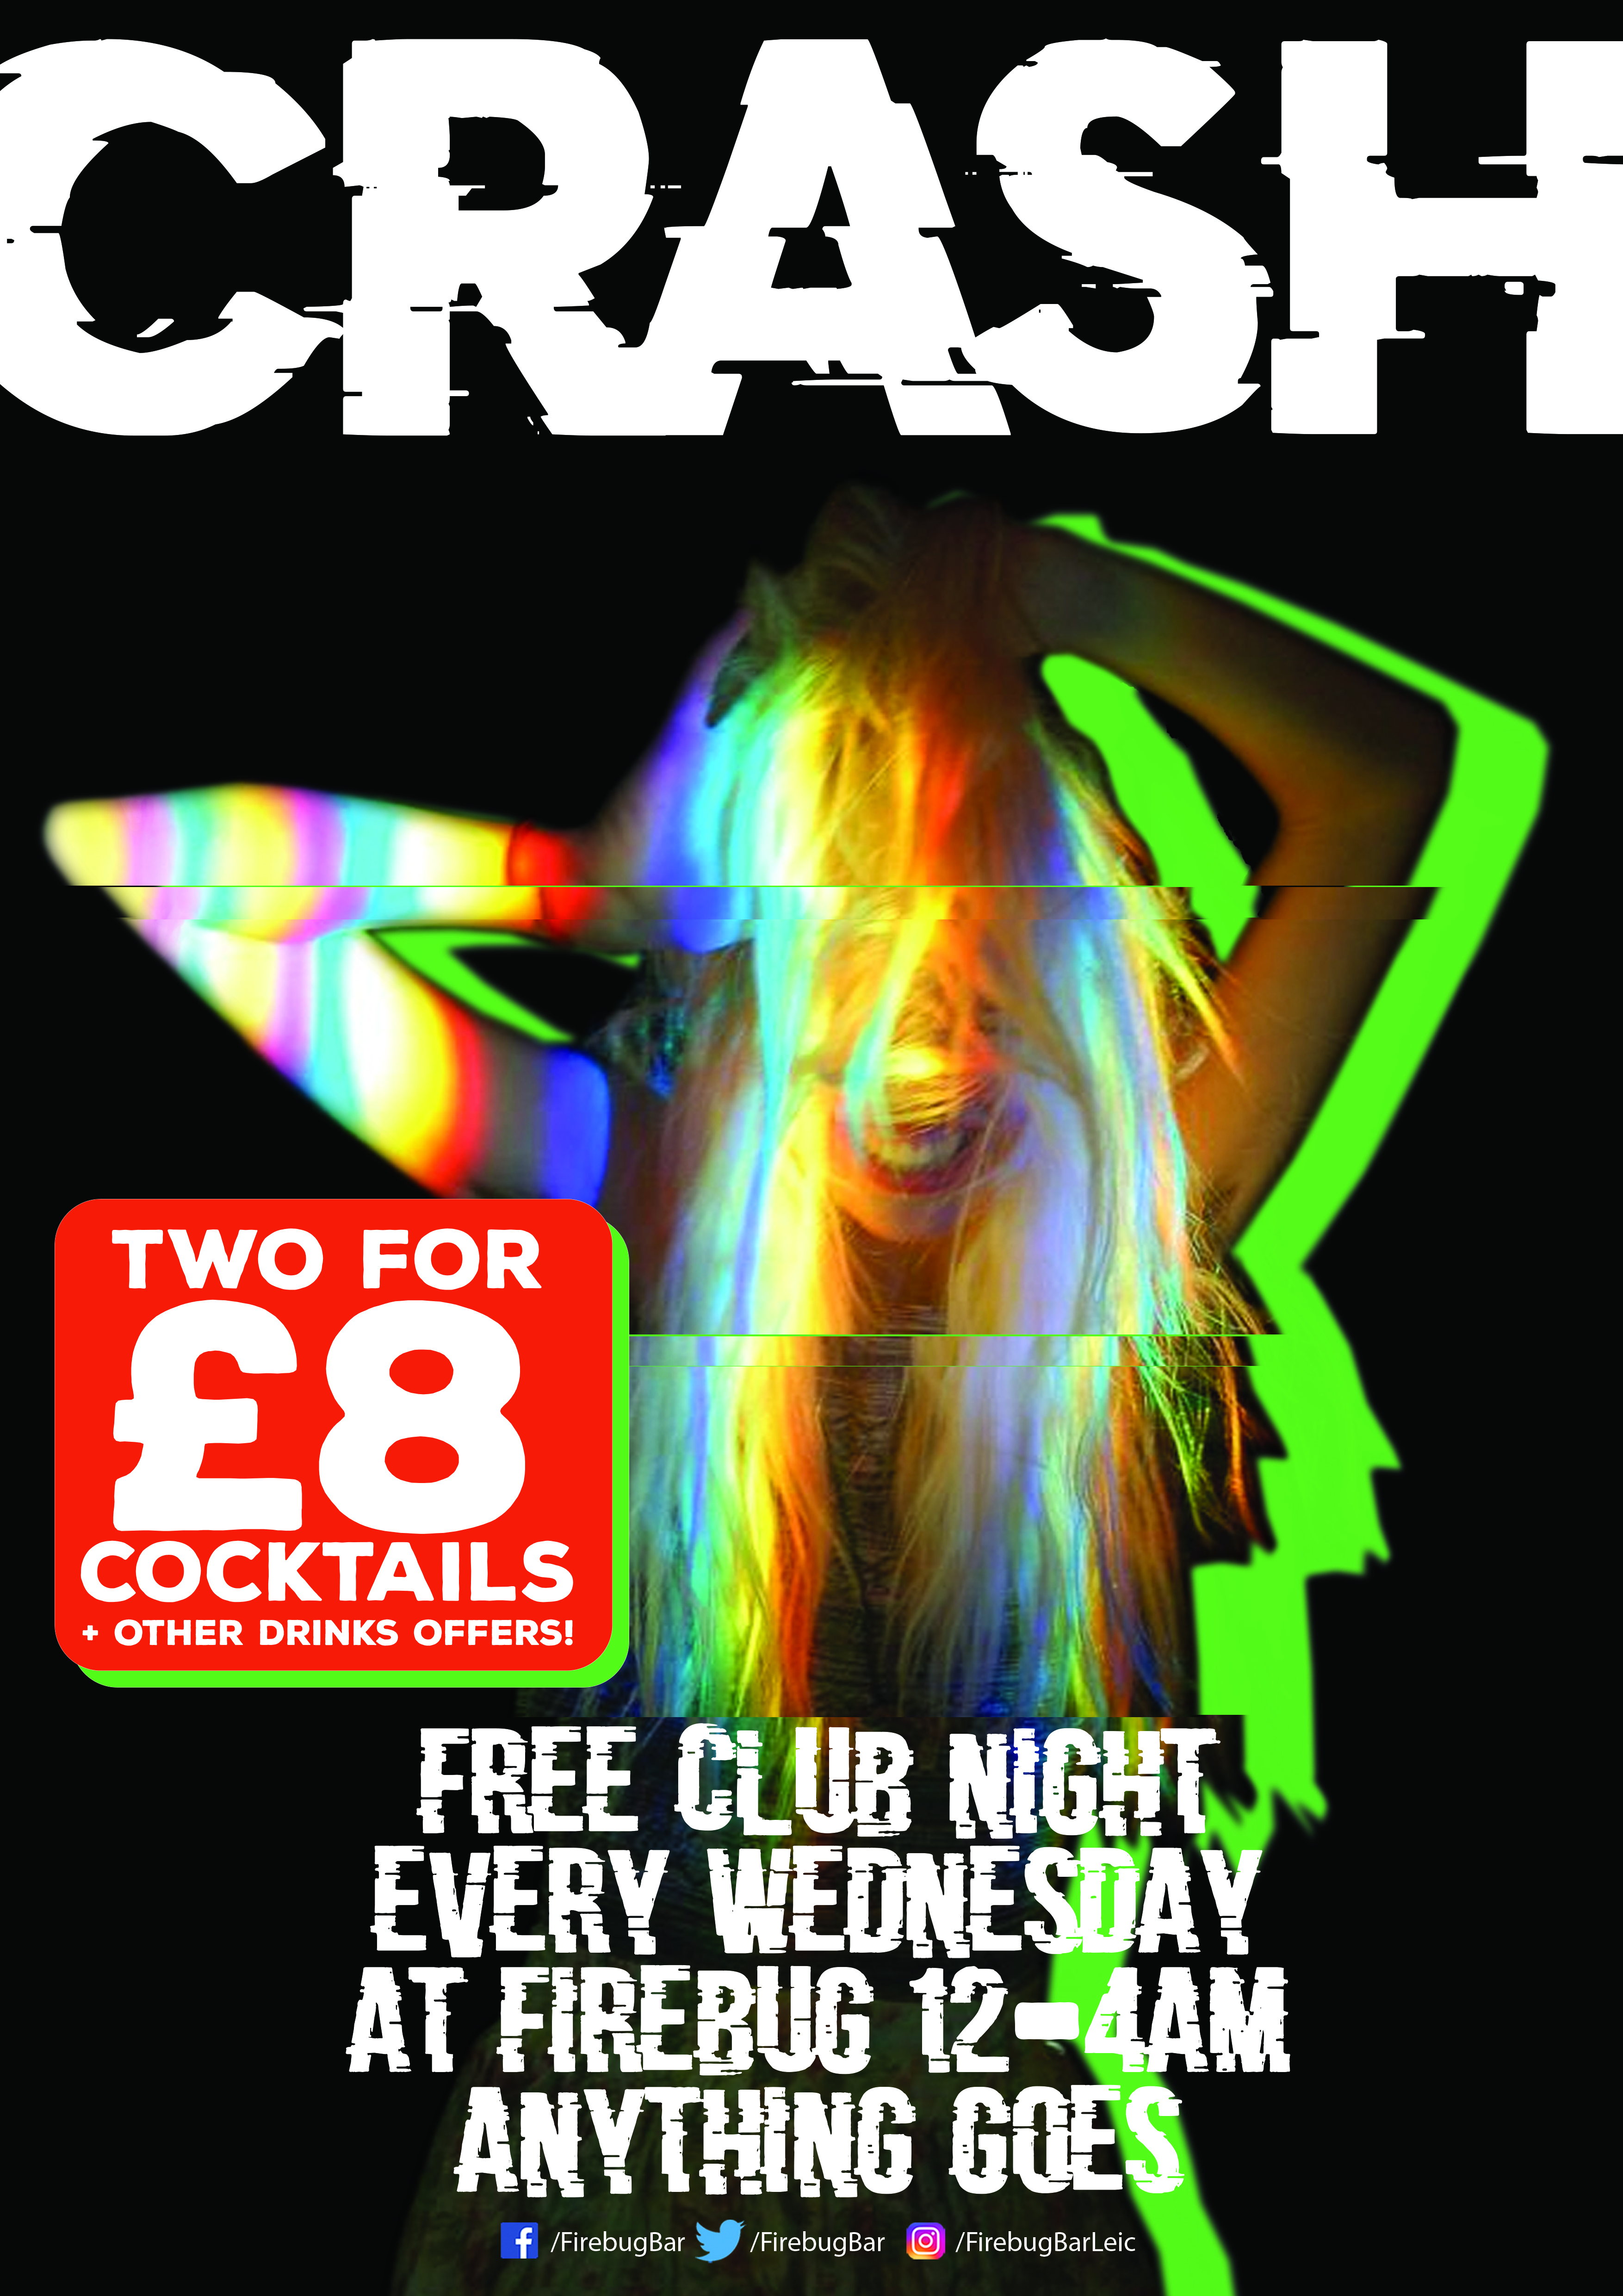 CRASH! Free Club Night every Wednesday upstairs!